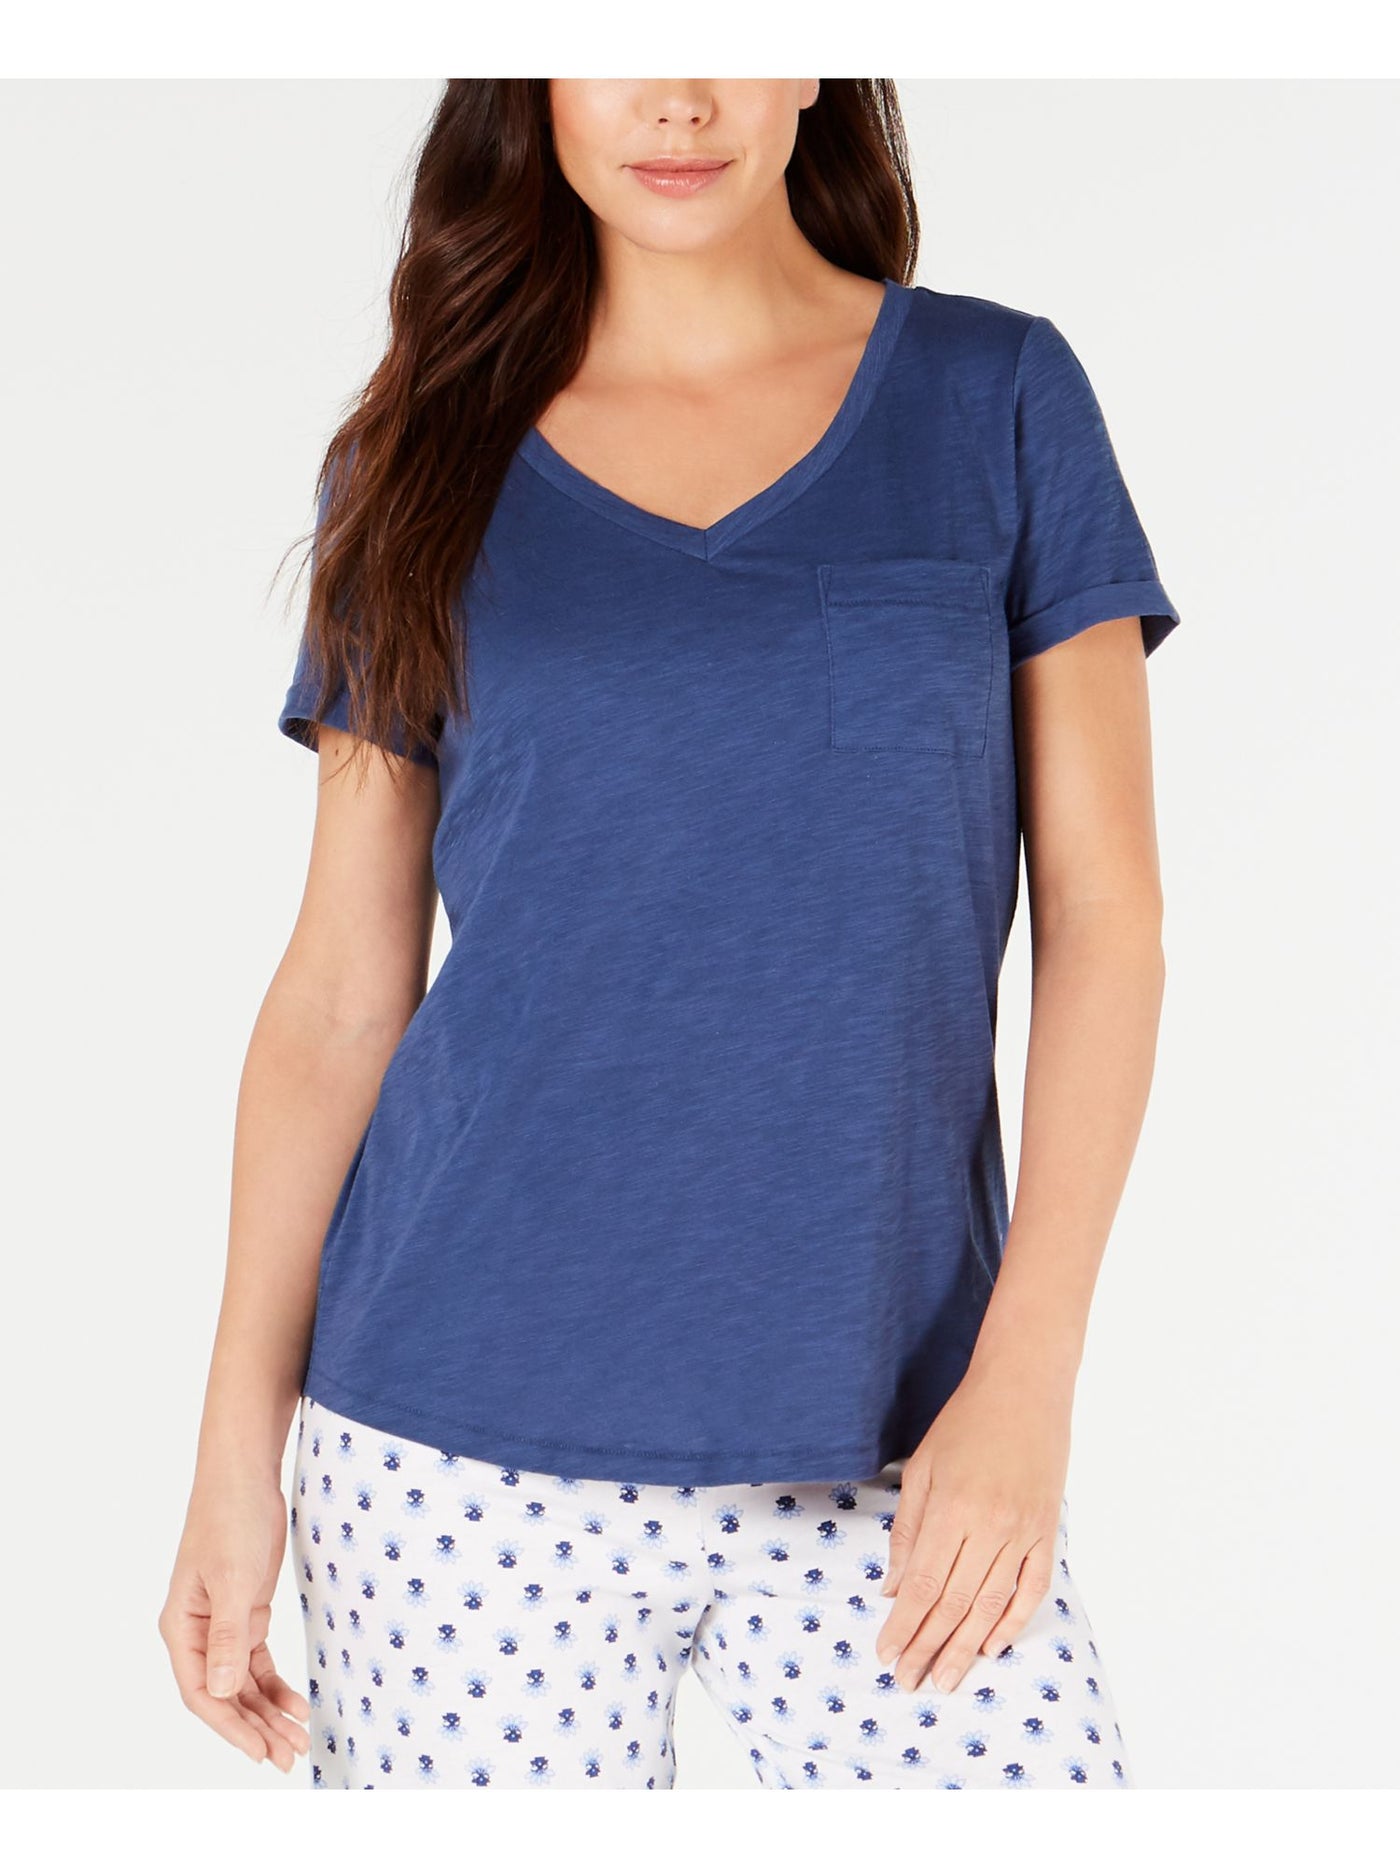 CHARTER CLUB Intimates Blue Solid Sleepwear Shirt Size: XS